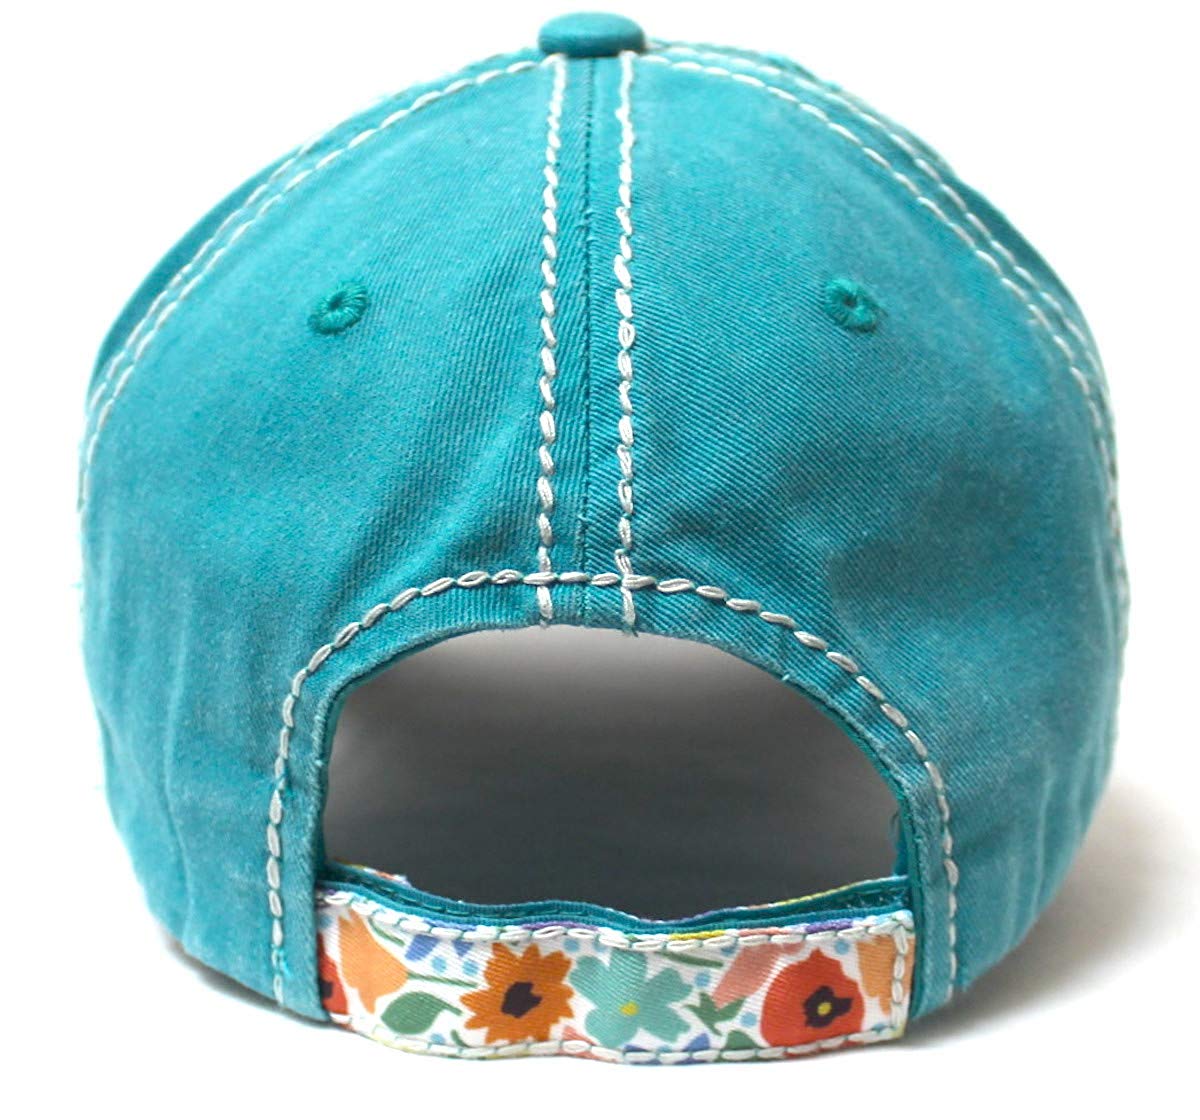 Cactus Floral Patchwork Embroidery Baseball Cap w/Monogram Bloom Detail, Turquoise - Caps 'N Vintage 